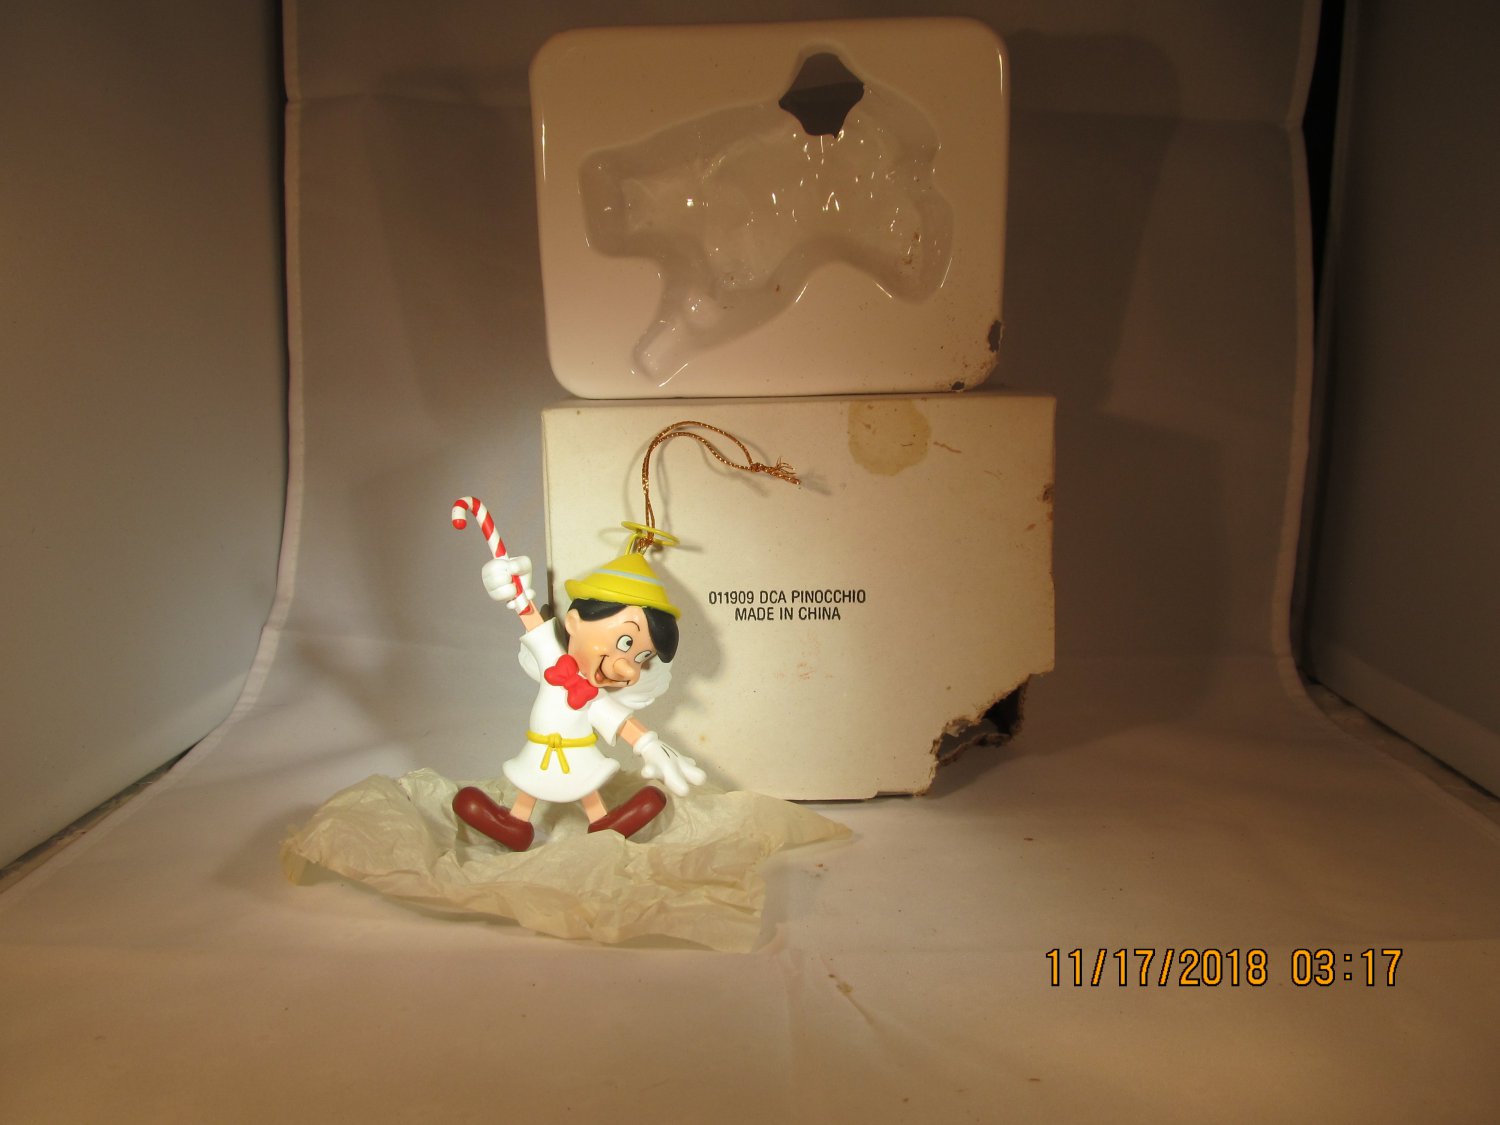 Pinocchio Ornament- Disney Christmas Magic By Grolier (Rare)